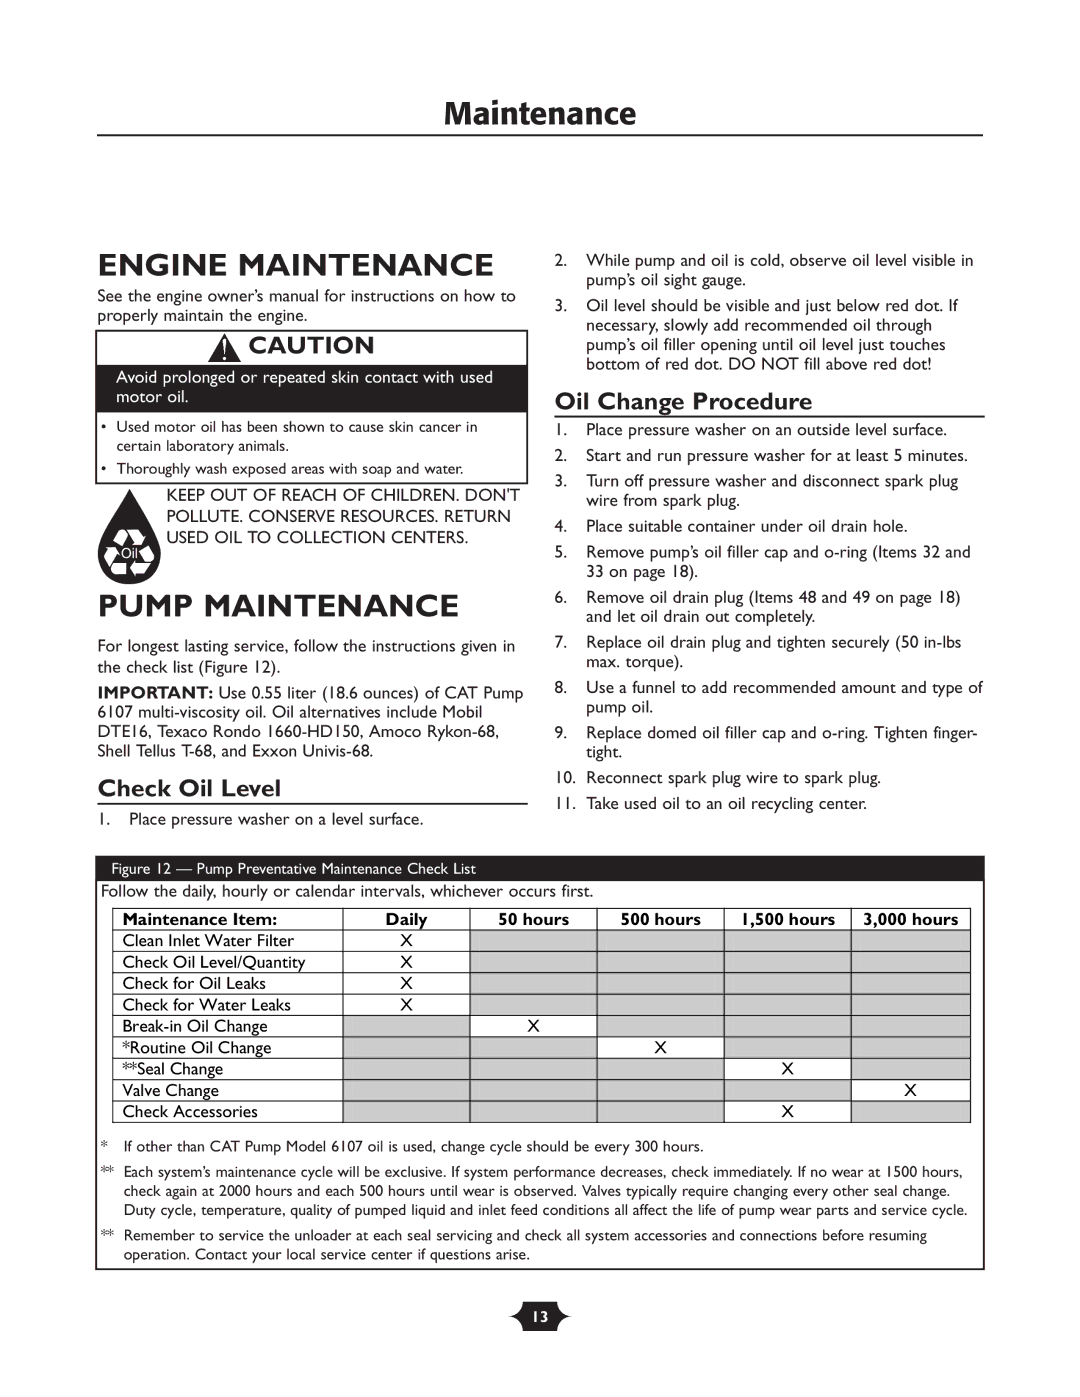 Husqvarna 1337PW owner manual Engine Maintenance, Pump Maintenance, Oil Change Procedure, Check Oil Level 